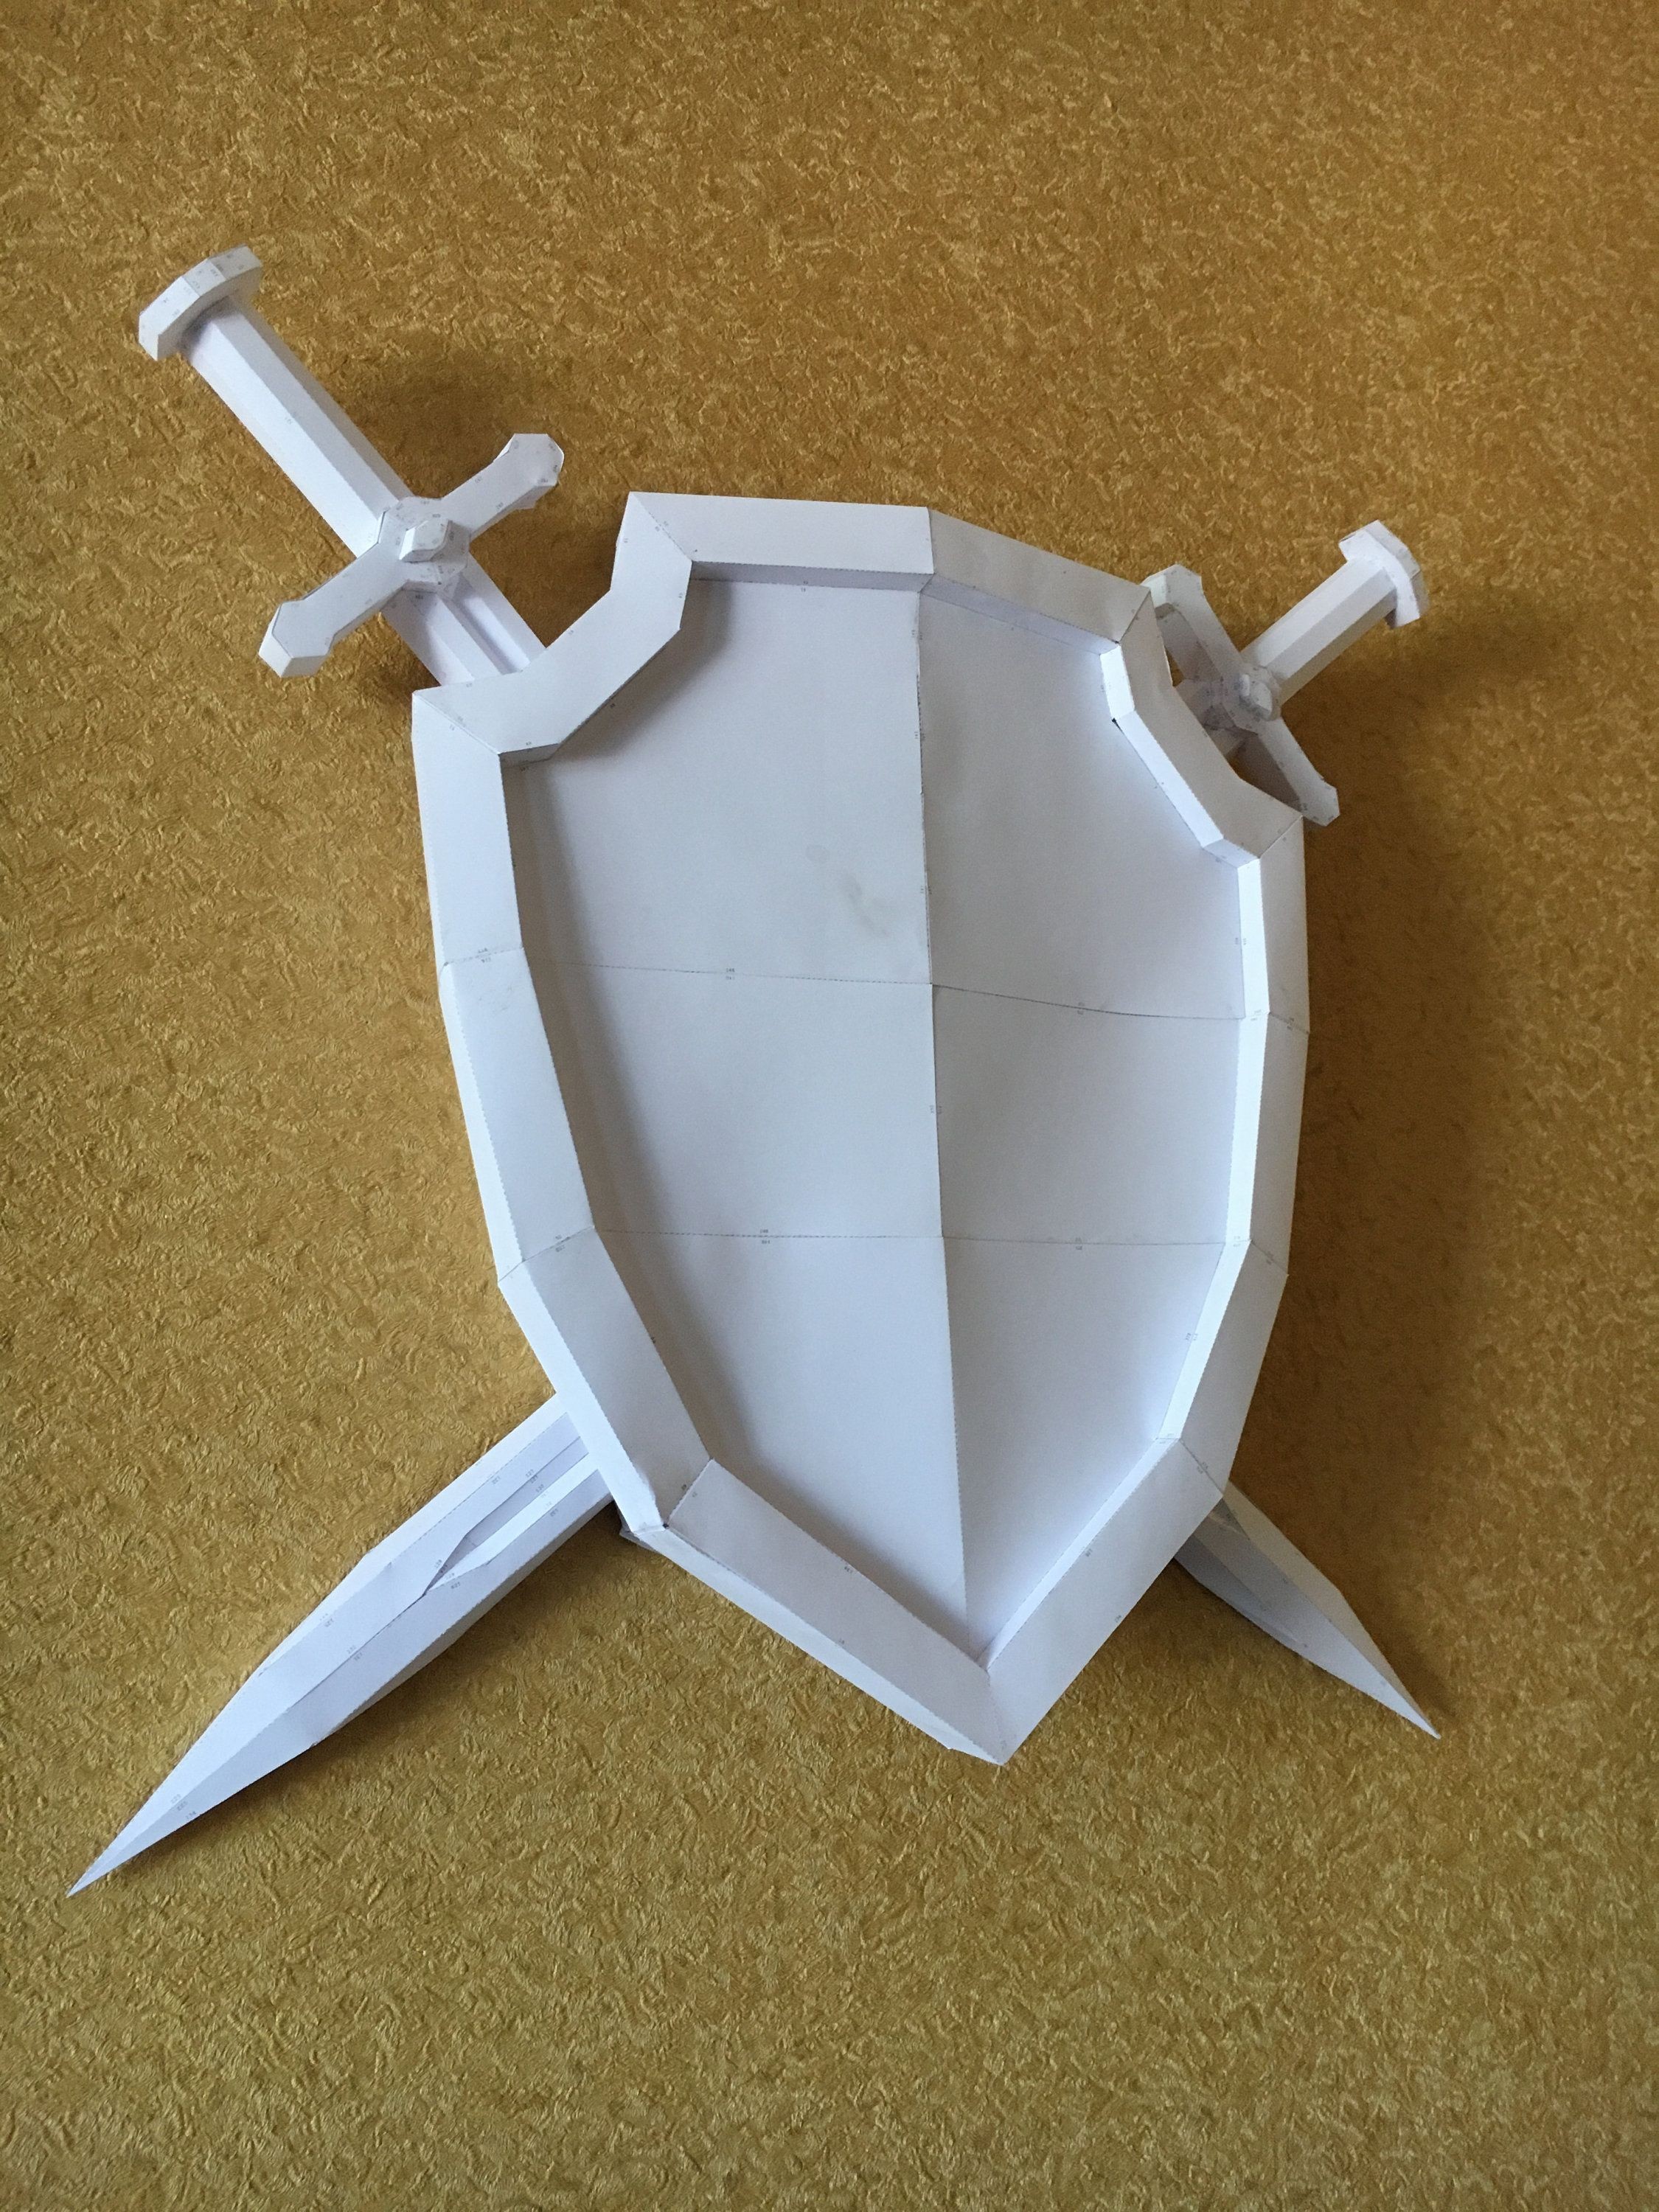 Papercraft Birds Sword Shield Diy Papercraft Model ÐÑÐ¼Ð°Ð¶Ð½ÑÐµ Ð¸Ð·Ð´ÐµÐ Ð¸Ñ